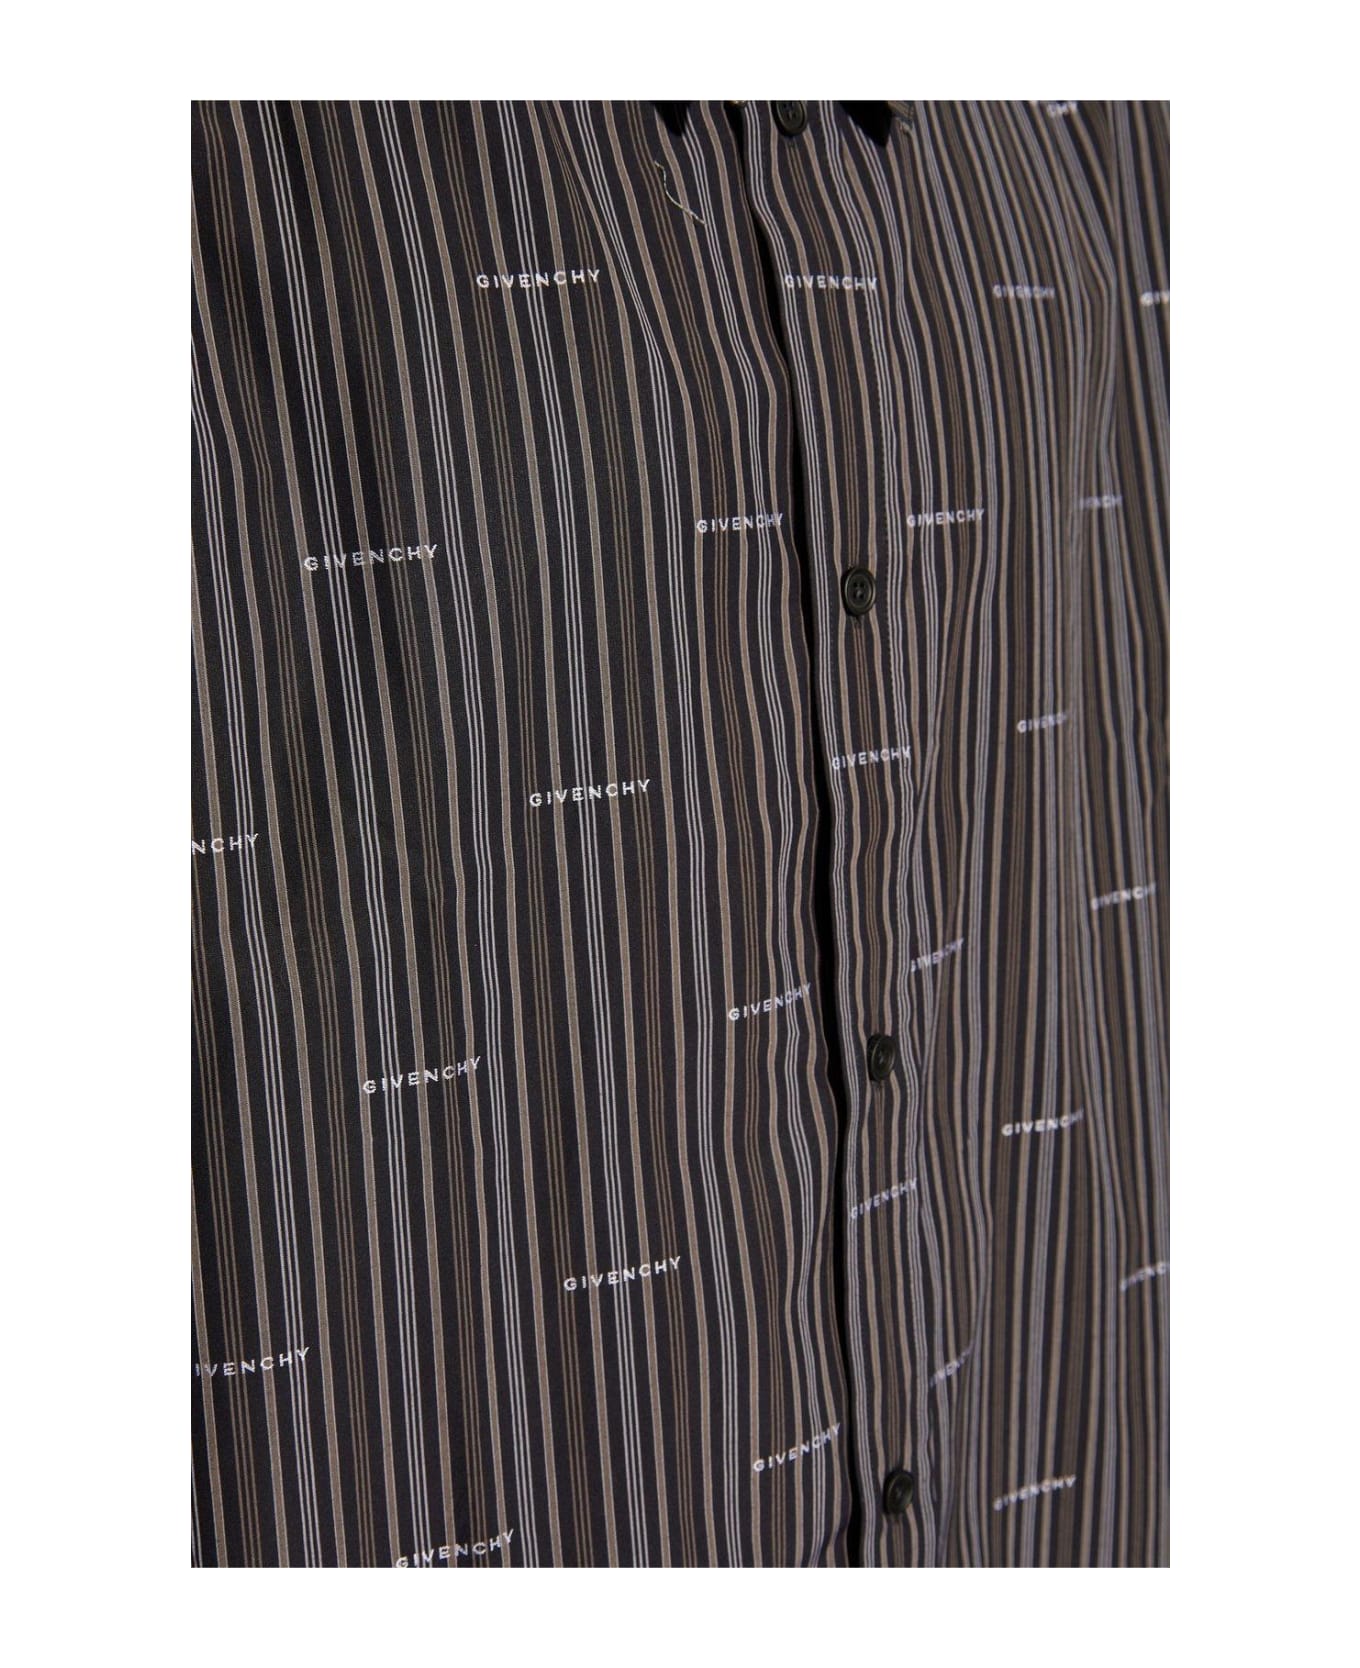 Givenchy Striped Short-sleeved Shirt - Nero シャツ